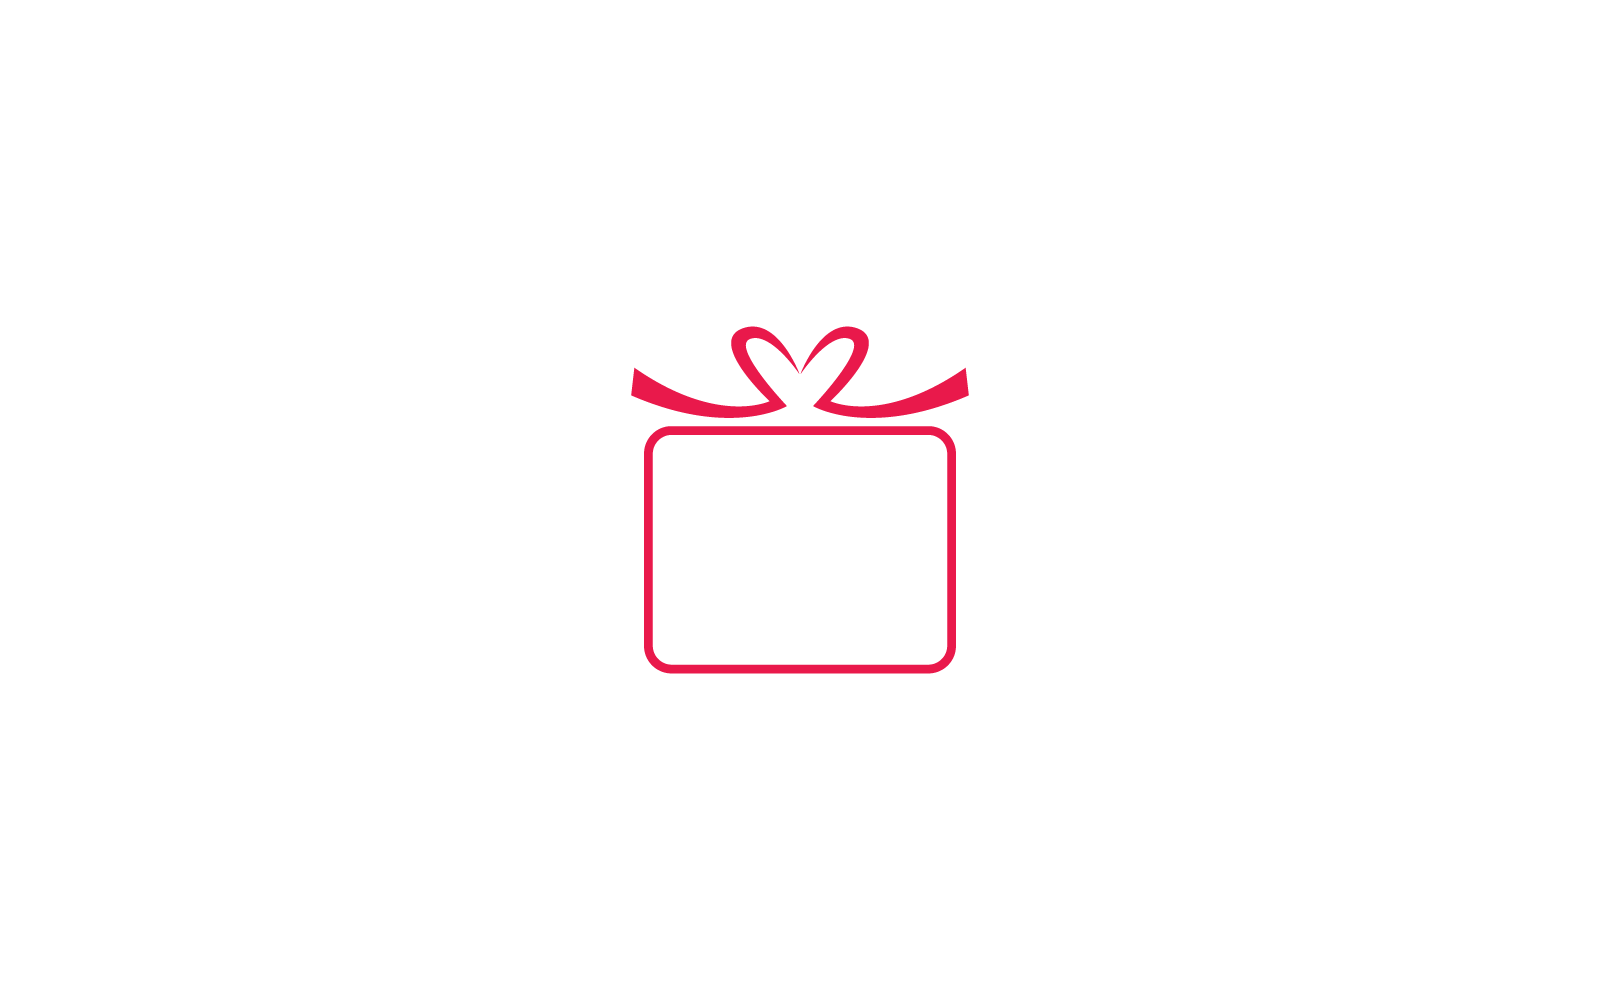 Gift Box, gift shop logo icon flat design template